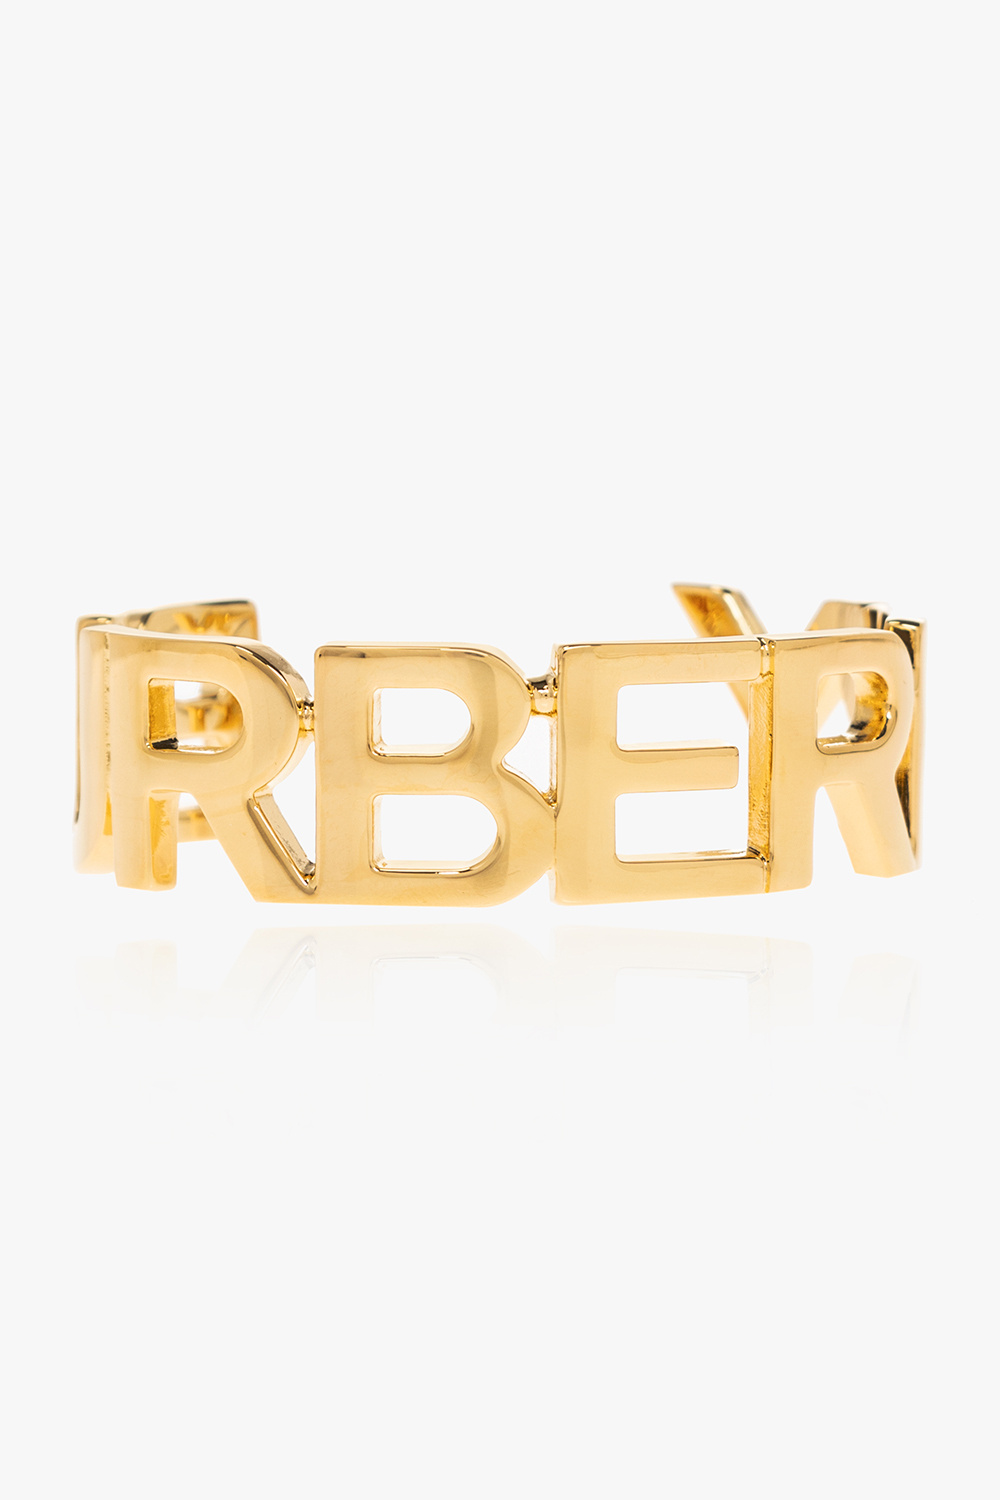 Burberry Brass bracelet